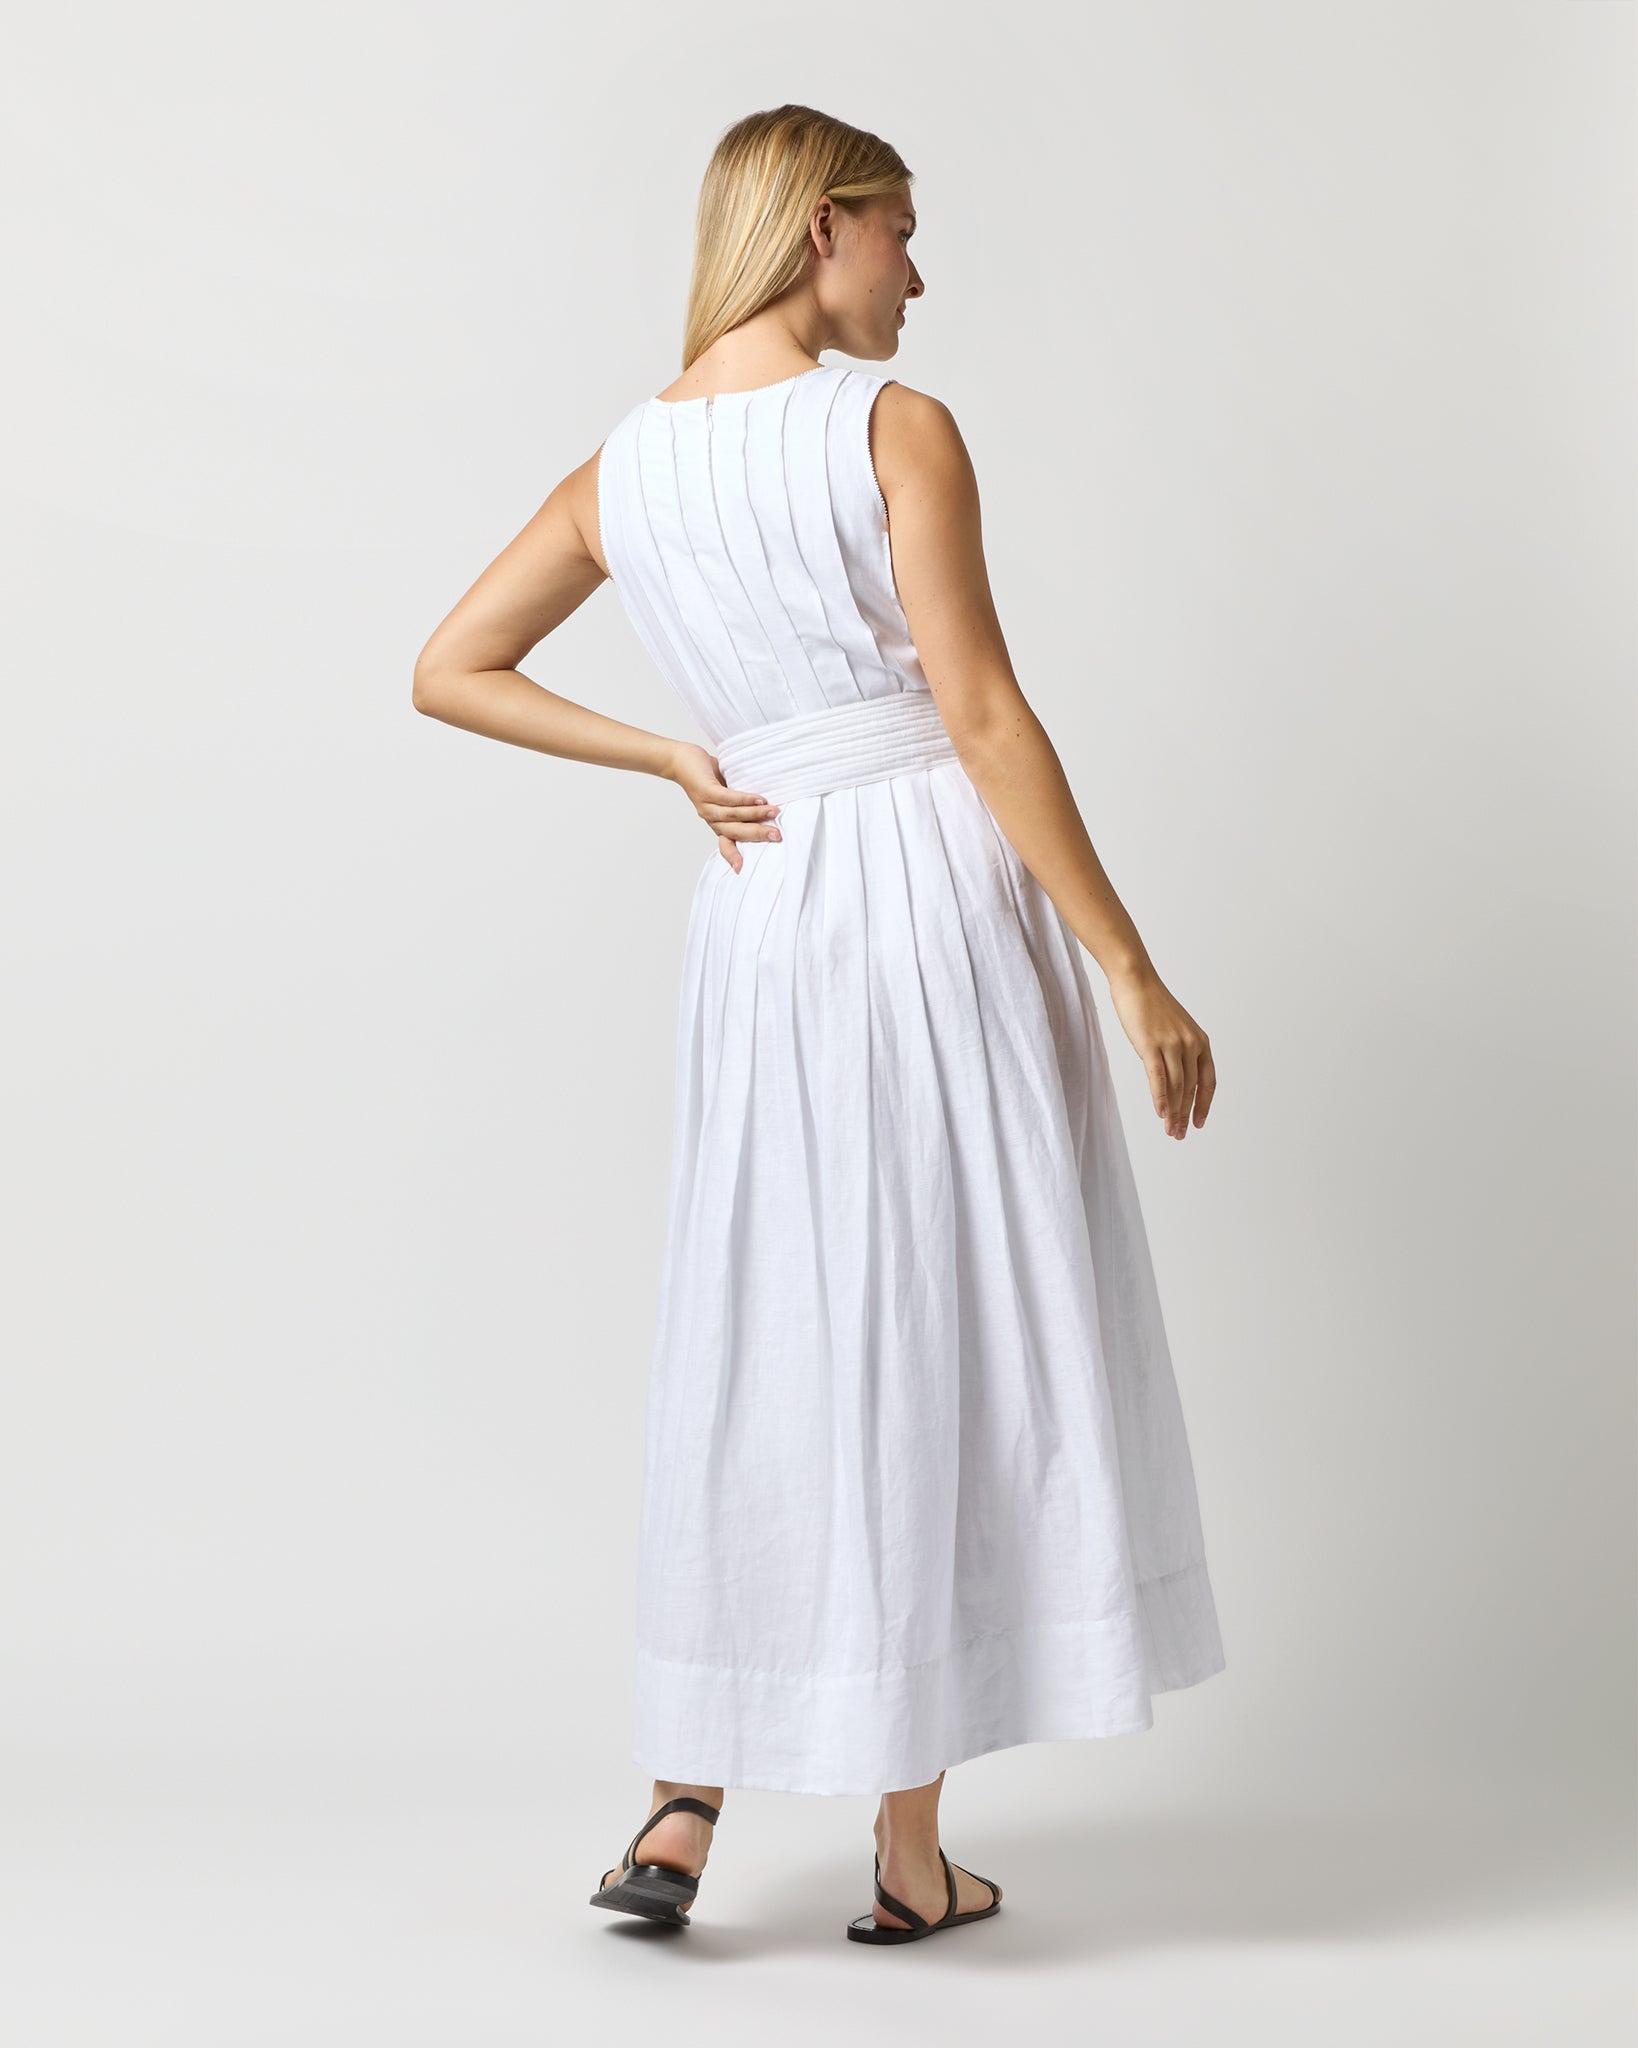 Pleated Jill Dress in White Sahara Linen | Shop Ann Mashburn